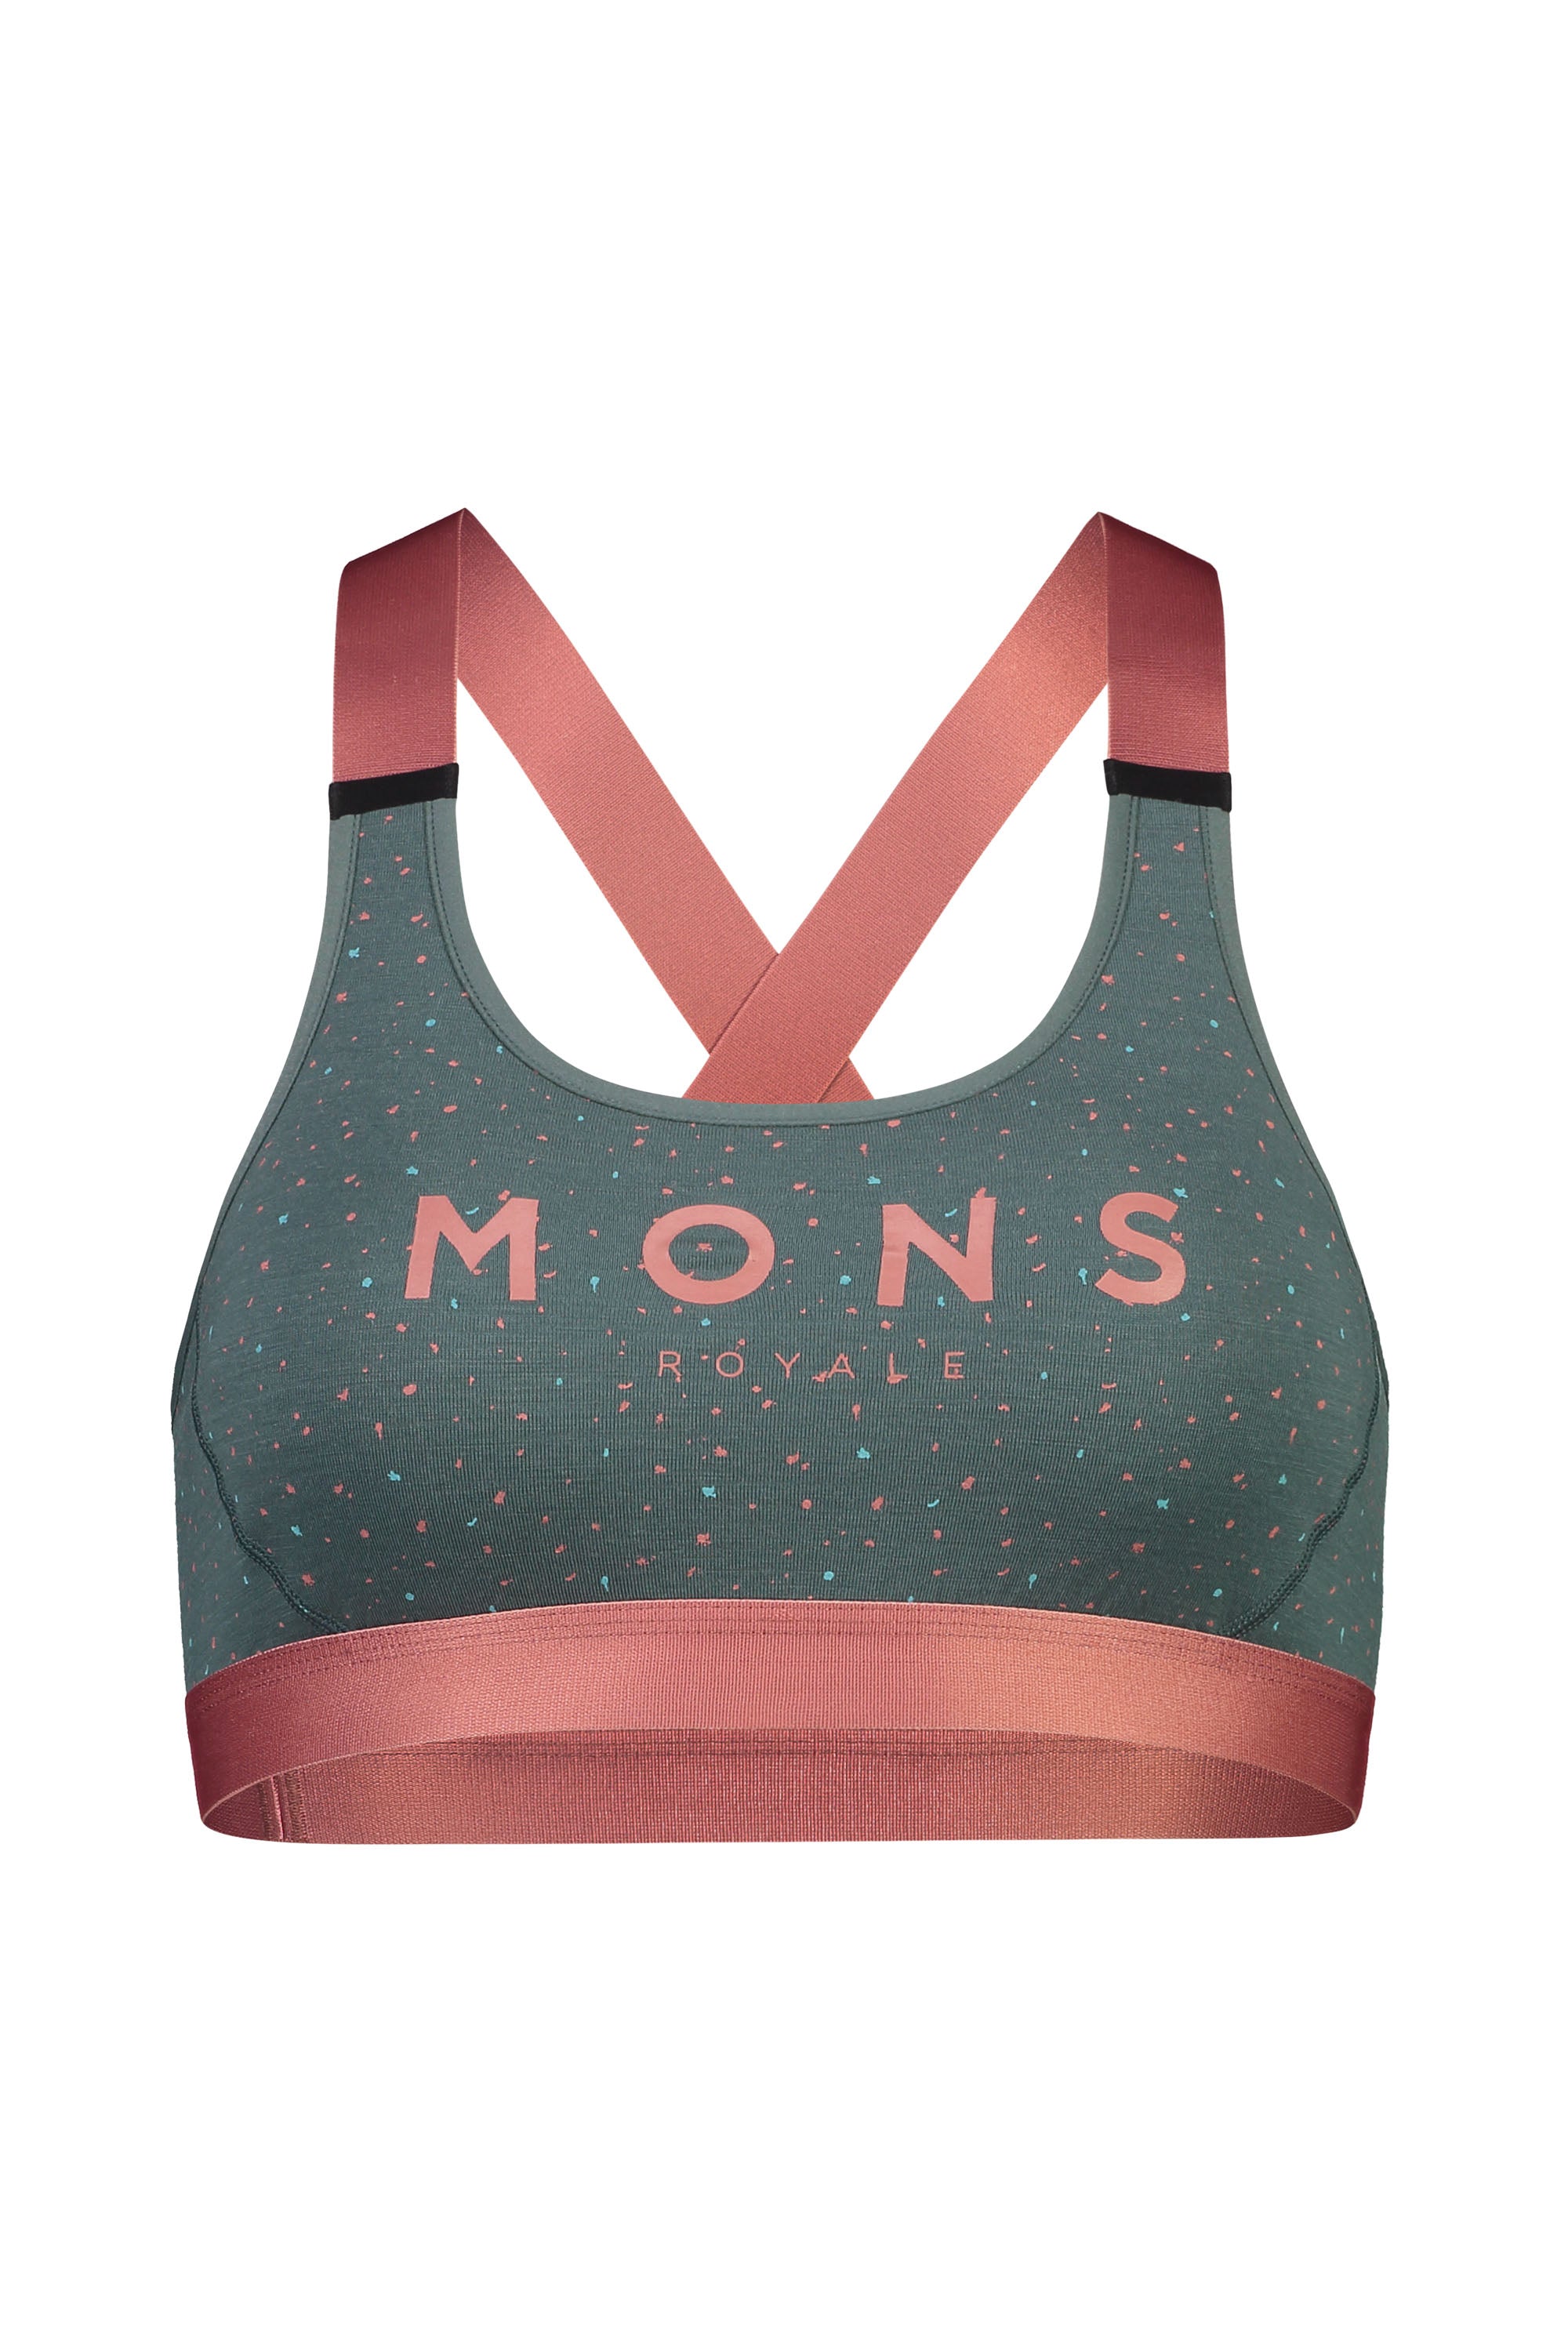 Mons Royale Women's Stella X-Back Sports Bra - Merino Wool